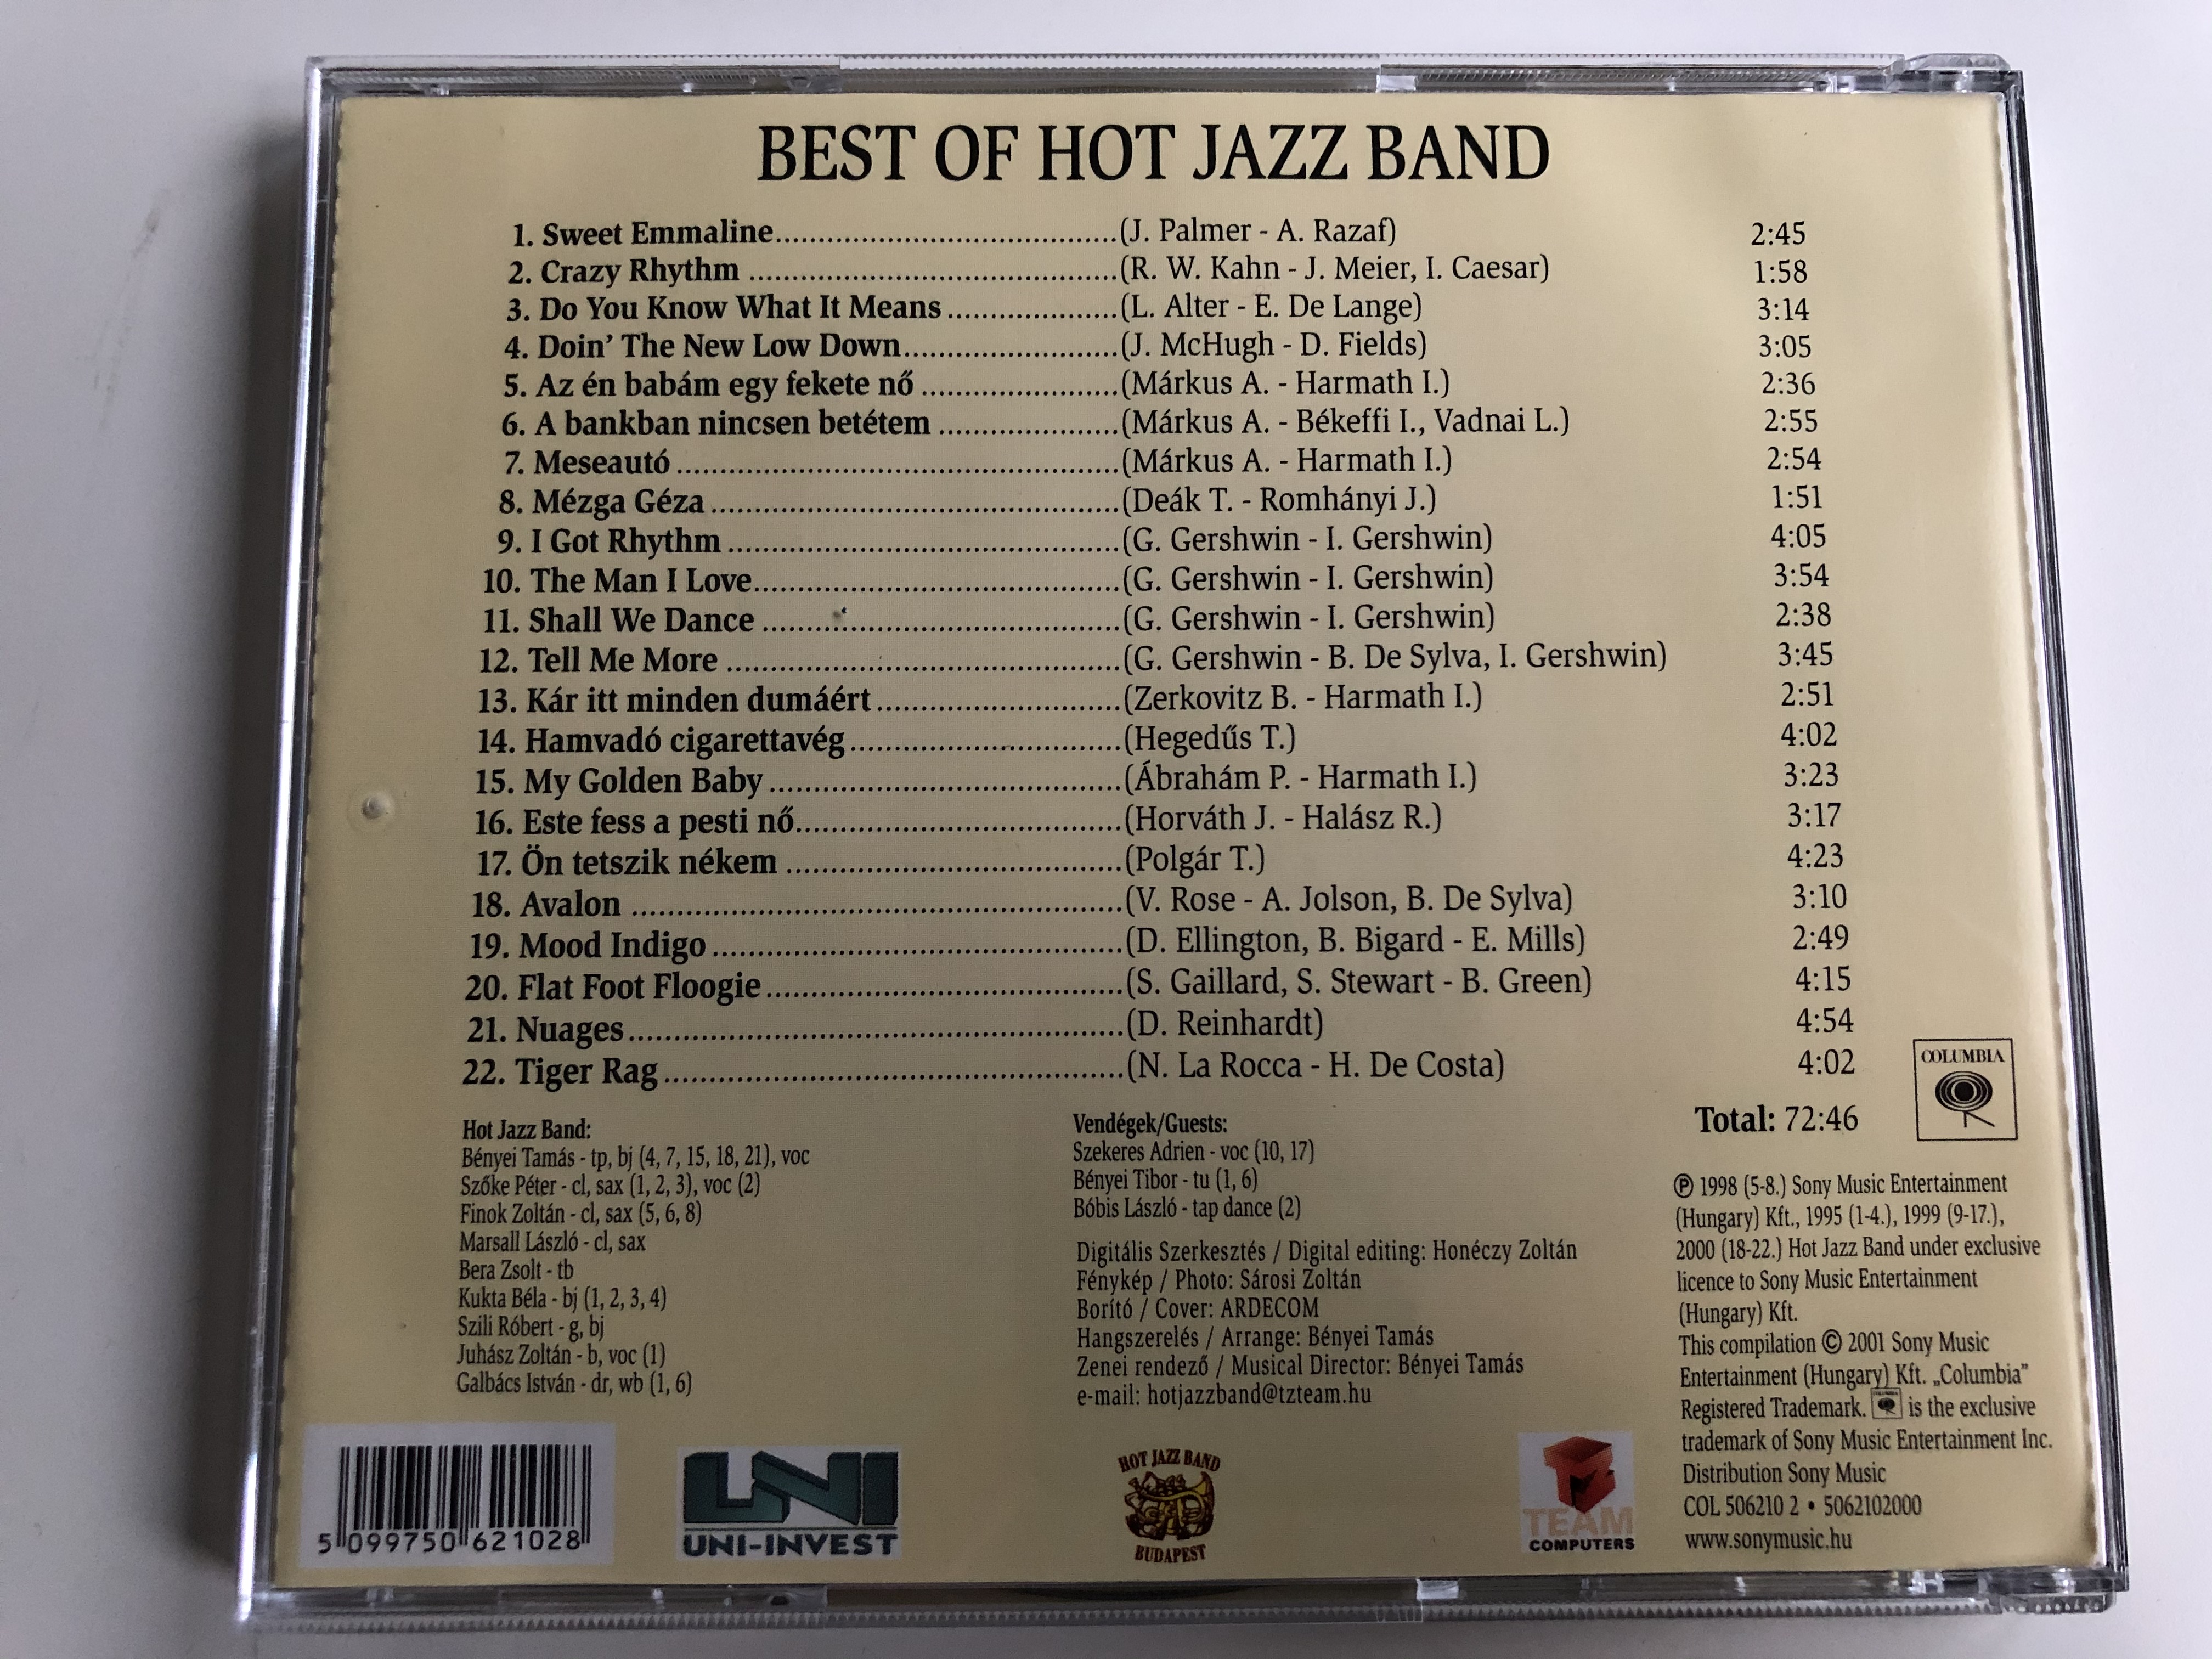 best-of-hot-jazz-band-sony-music-entertain-audio-cd-1998-iso-9002-5-.jpg